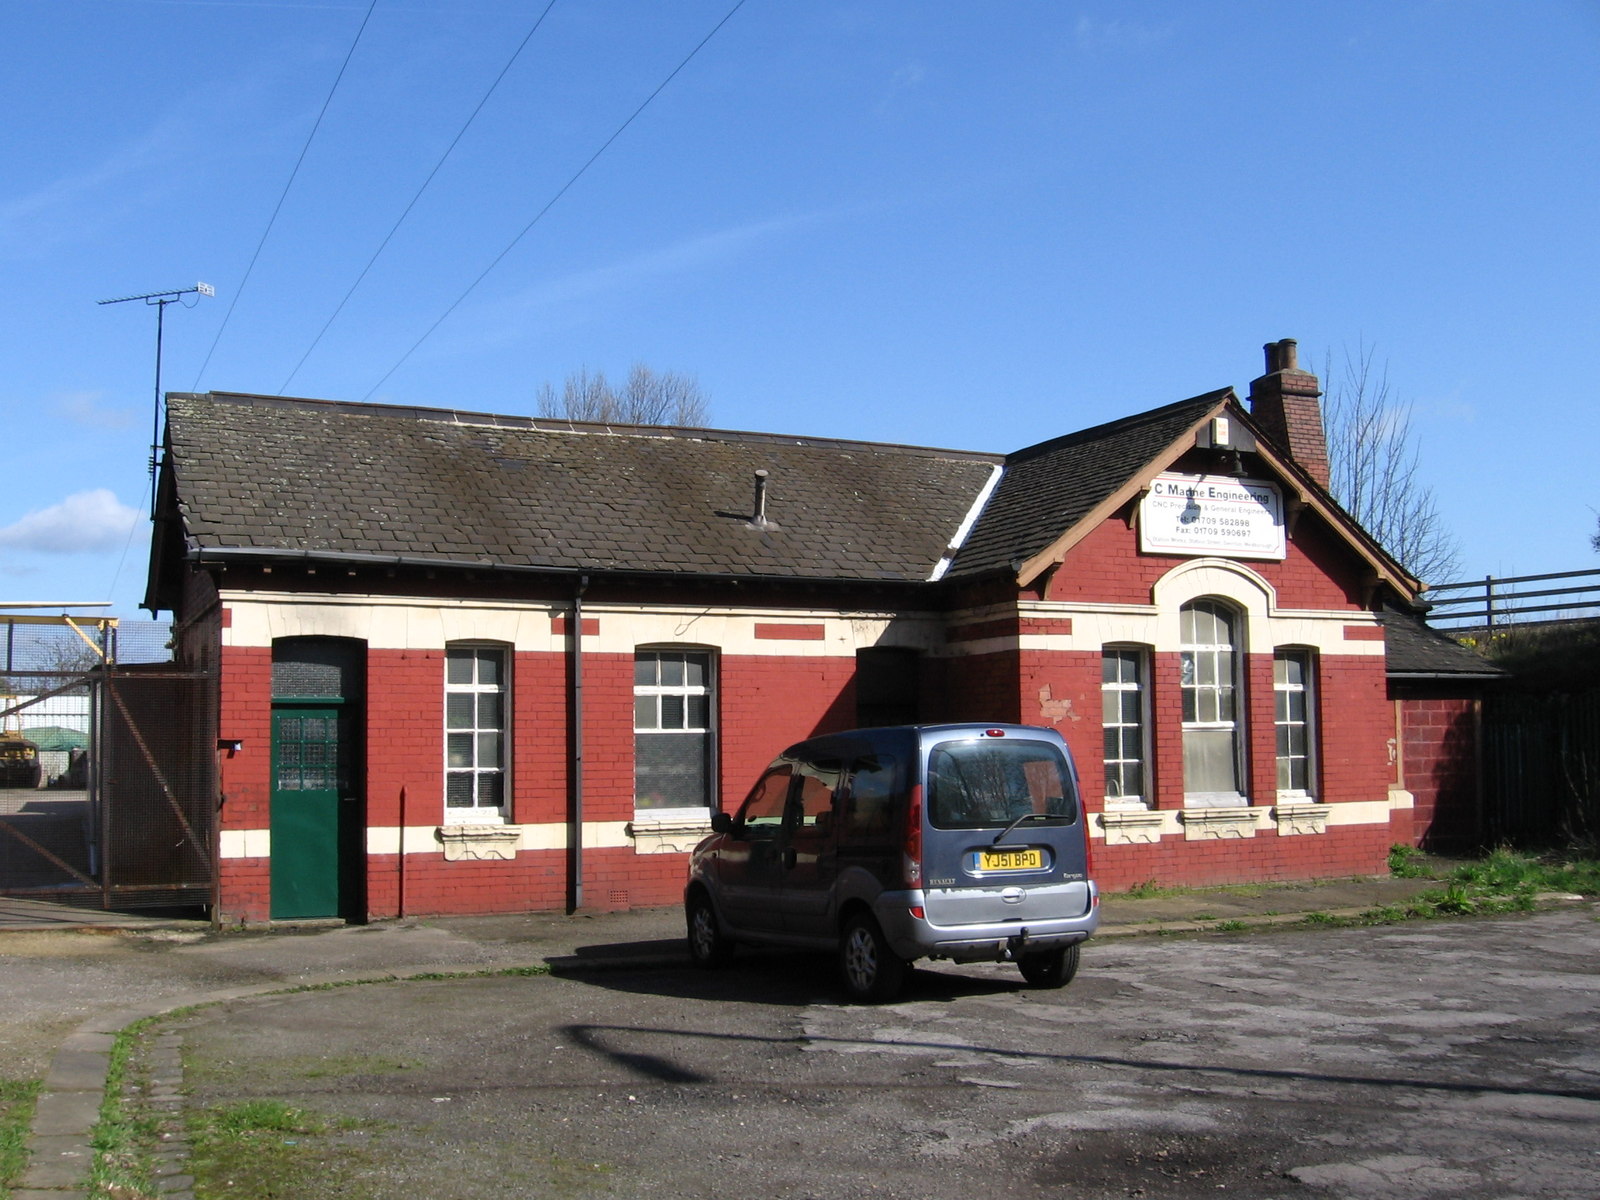 Swinton Town railway station